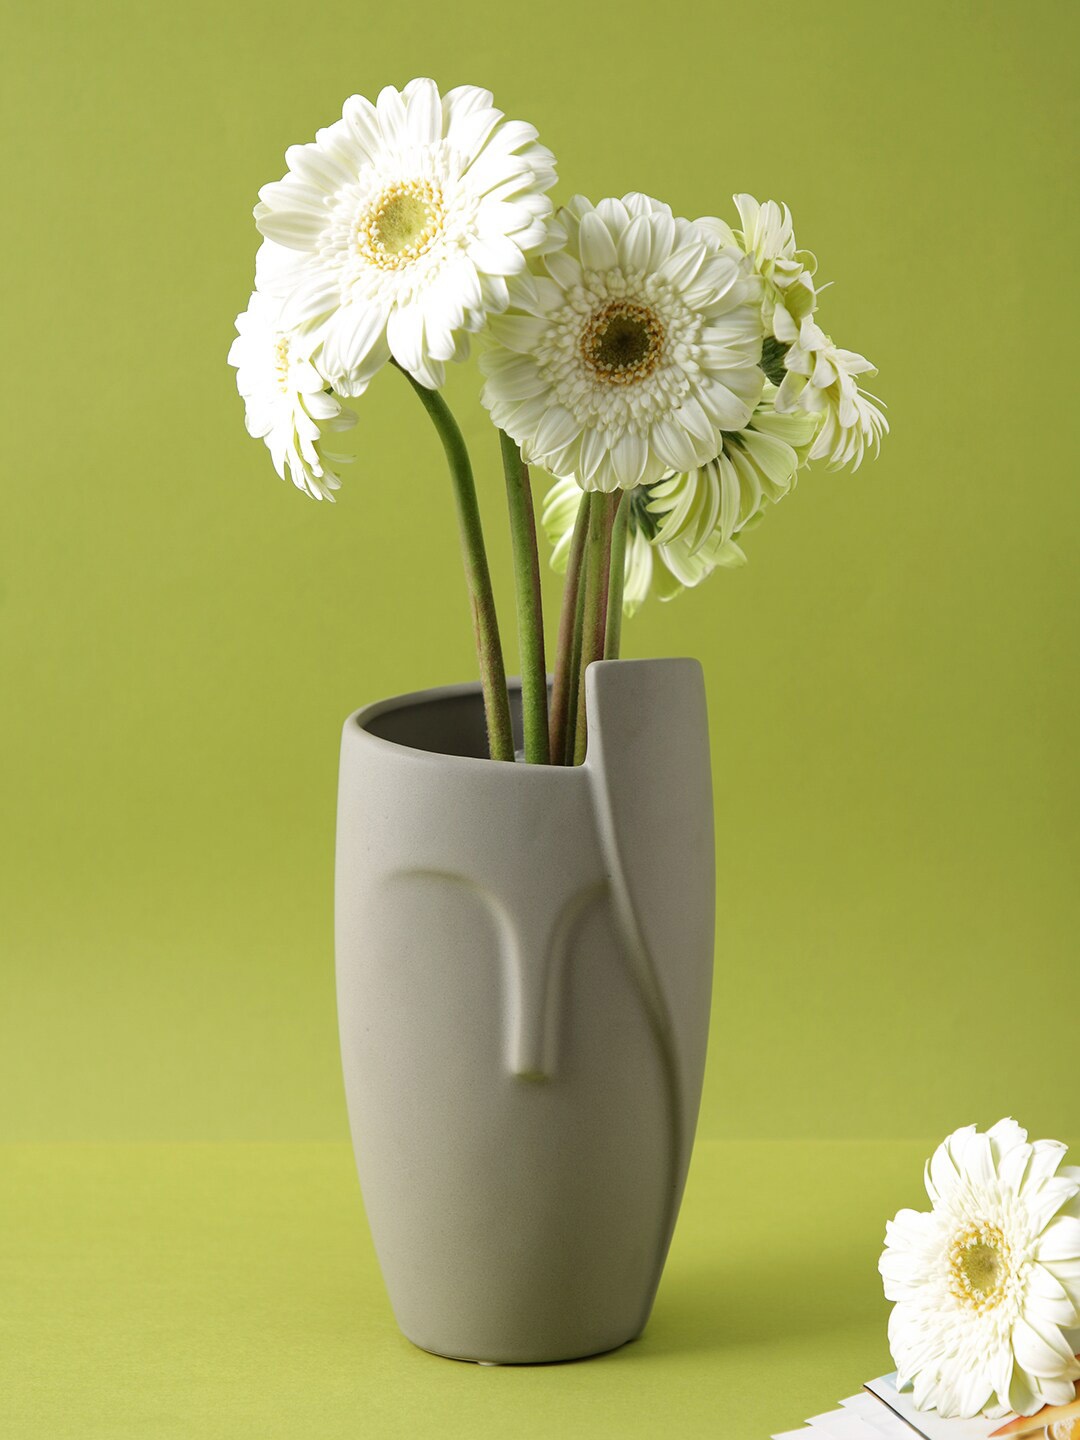 

TAYHAA Grey Abstract Human Face Like Design Ceramic Flower Vase